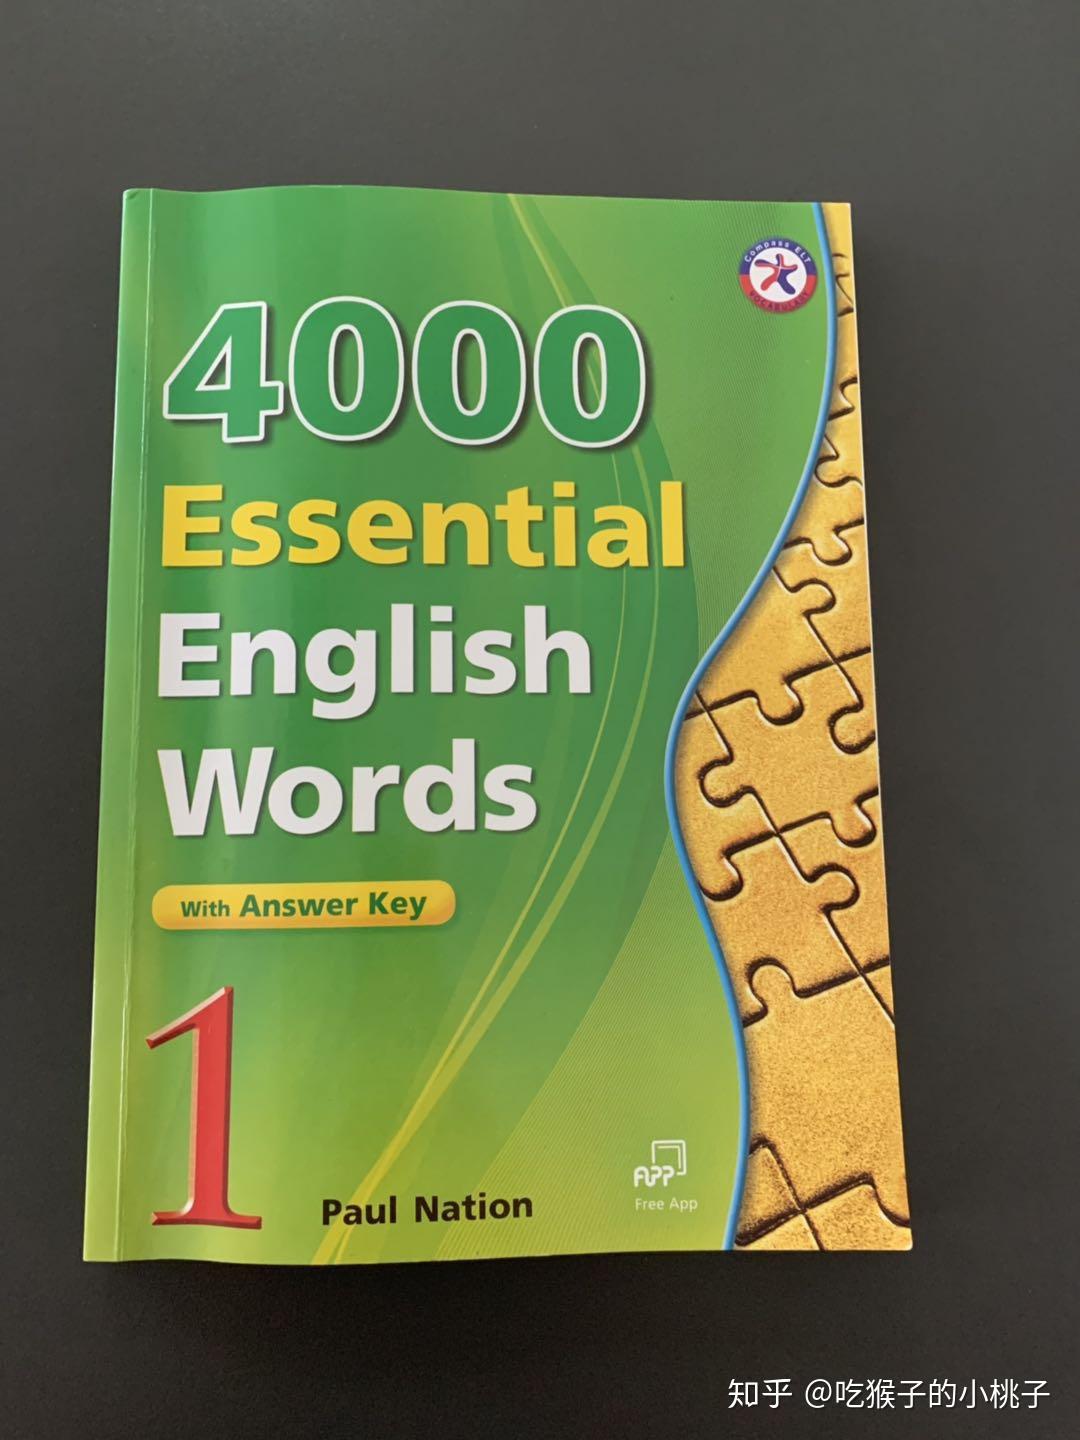 英语教材推荐-4000 Essential English Words - 知乎